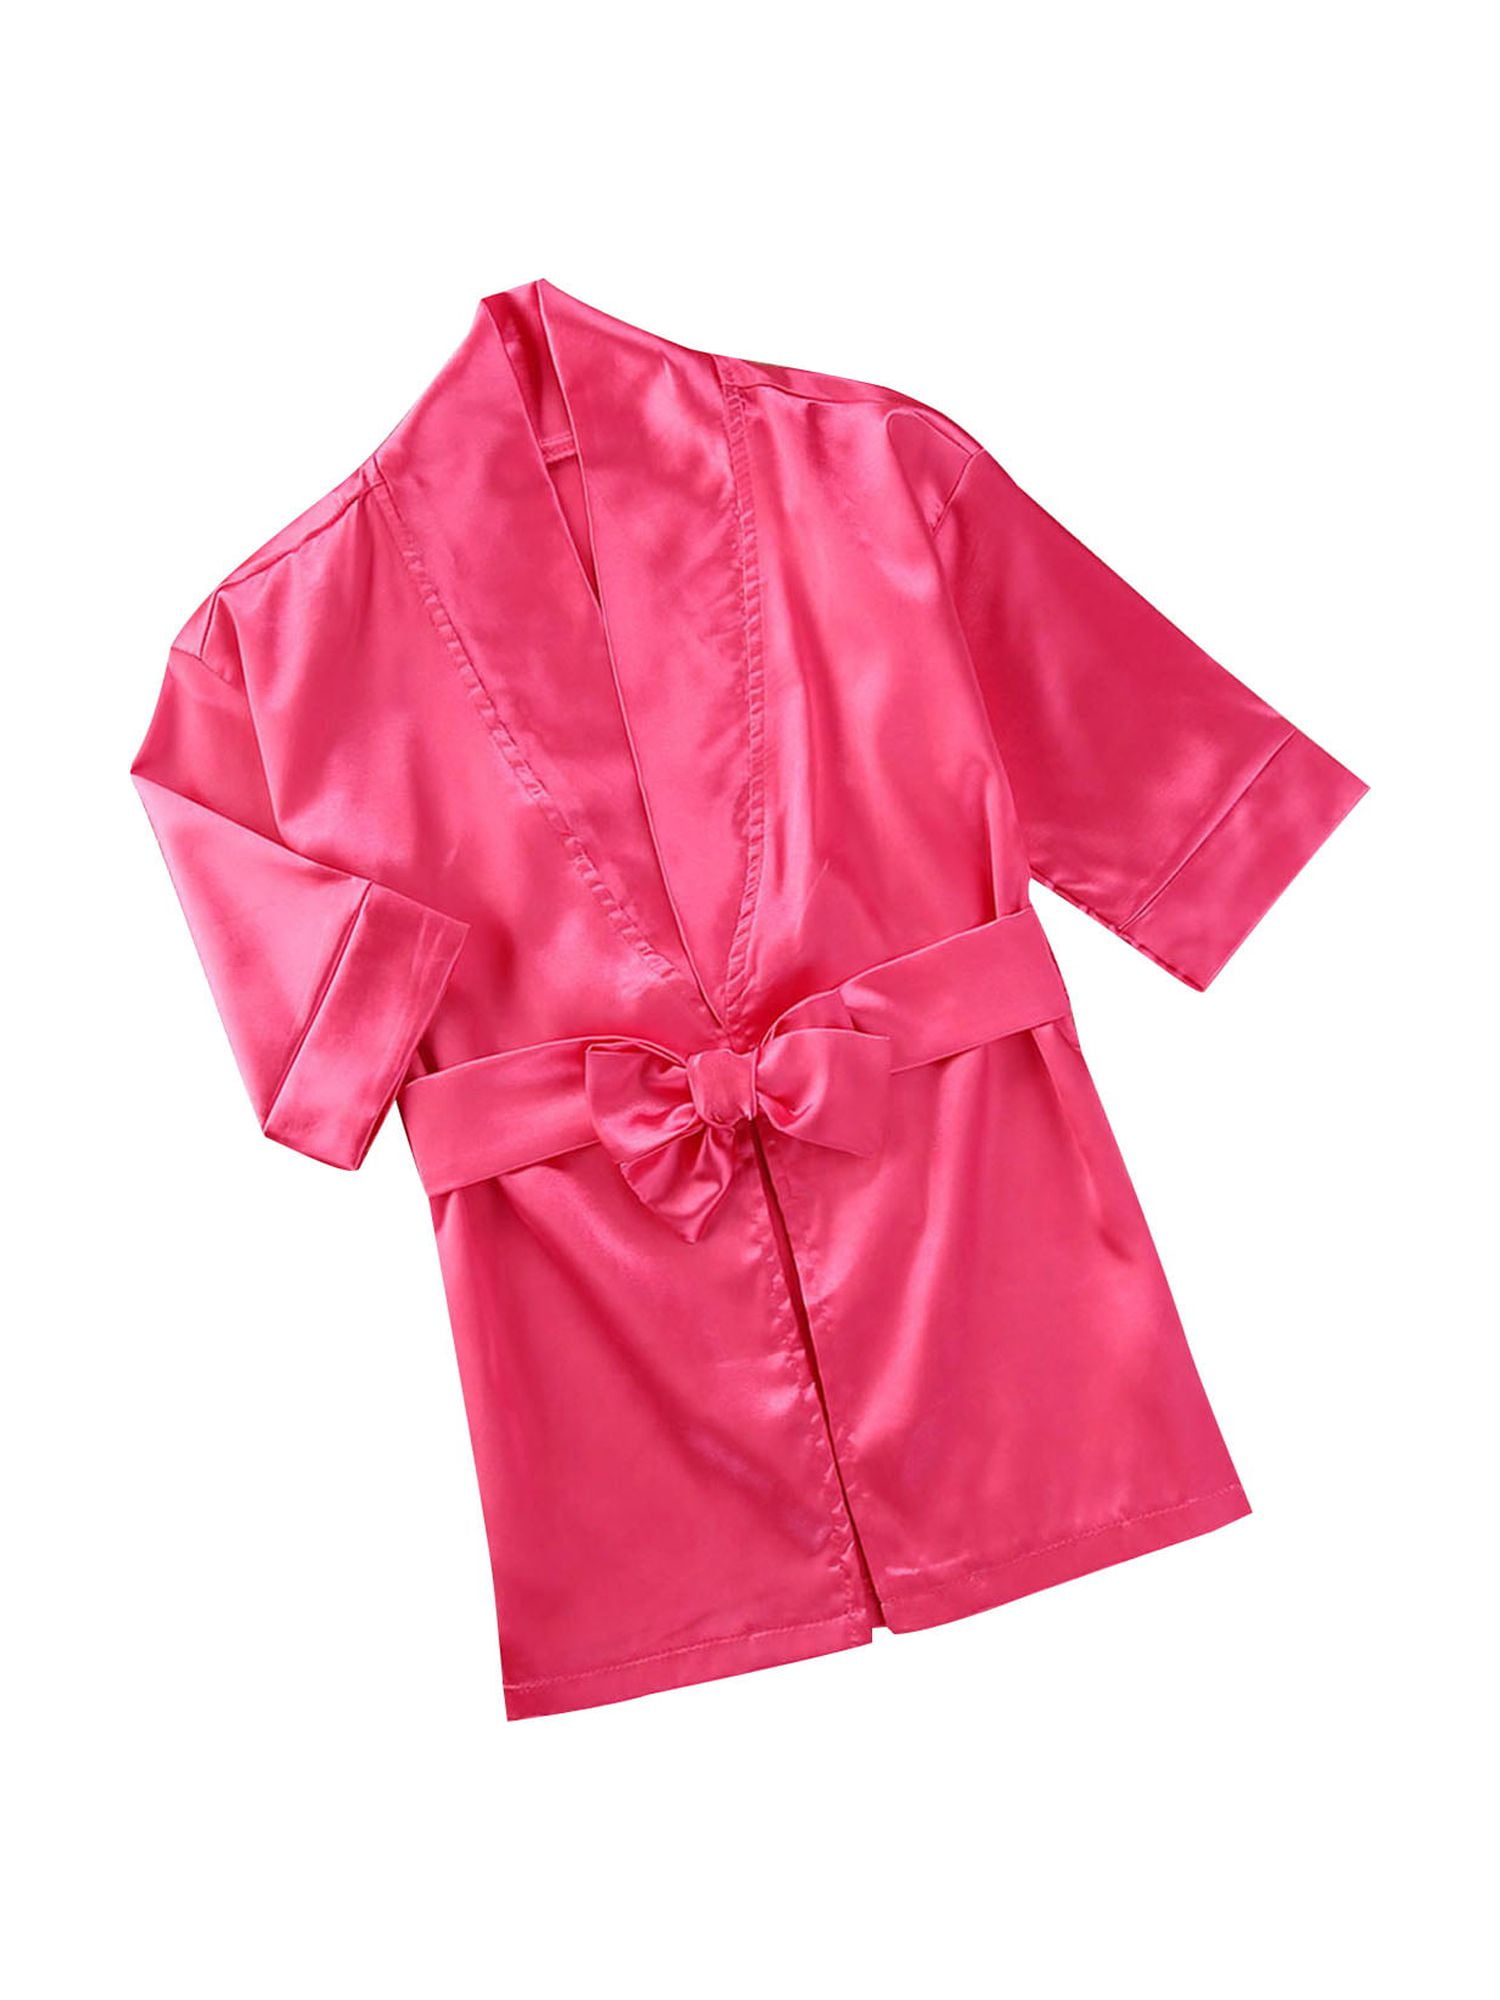 Toddler Kids Sleepwear Baby Girl Pajamas Nightgown Satin Silk Robes Night  Sleep Dress Bathrobe